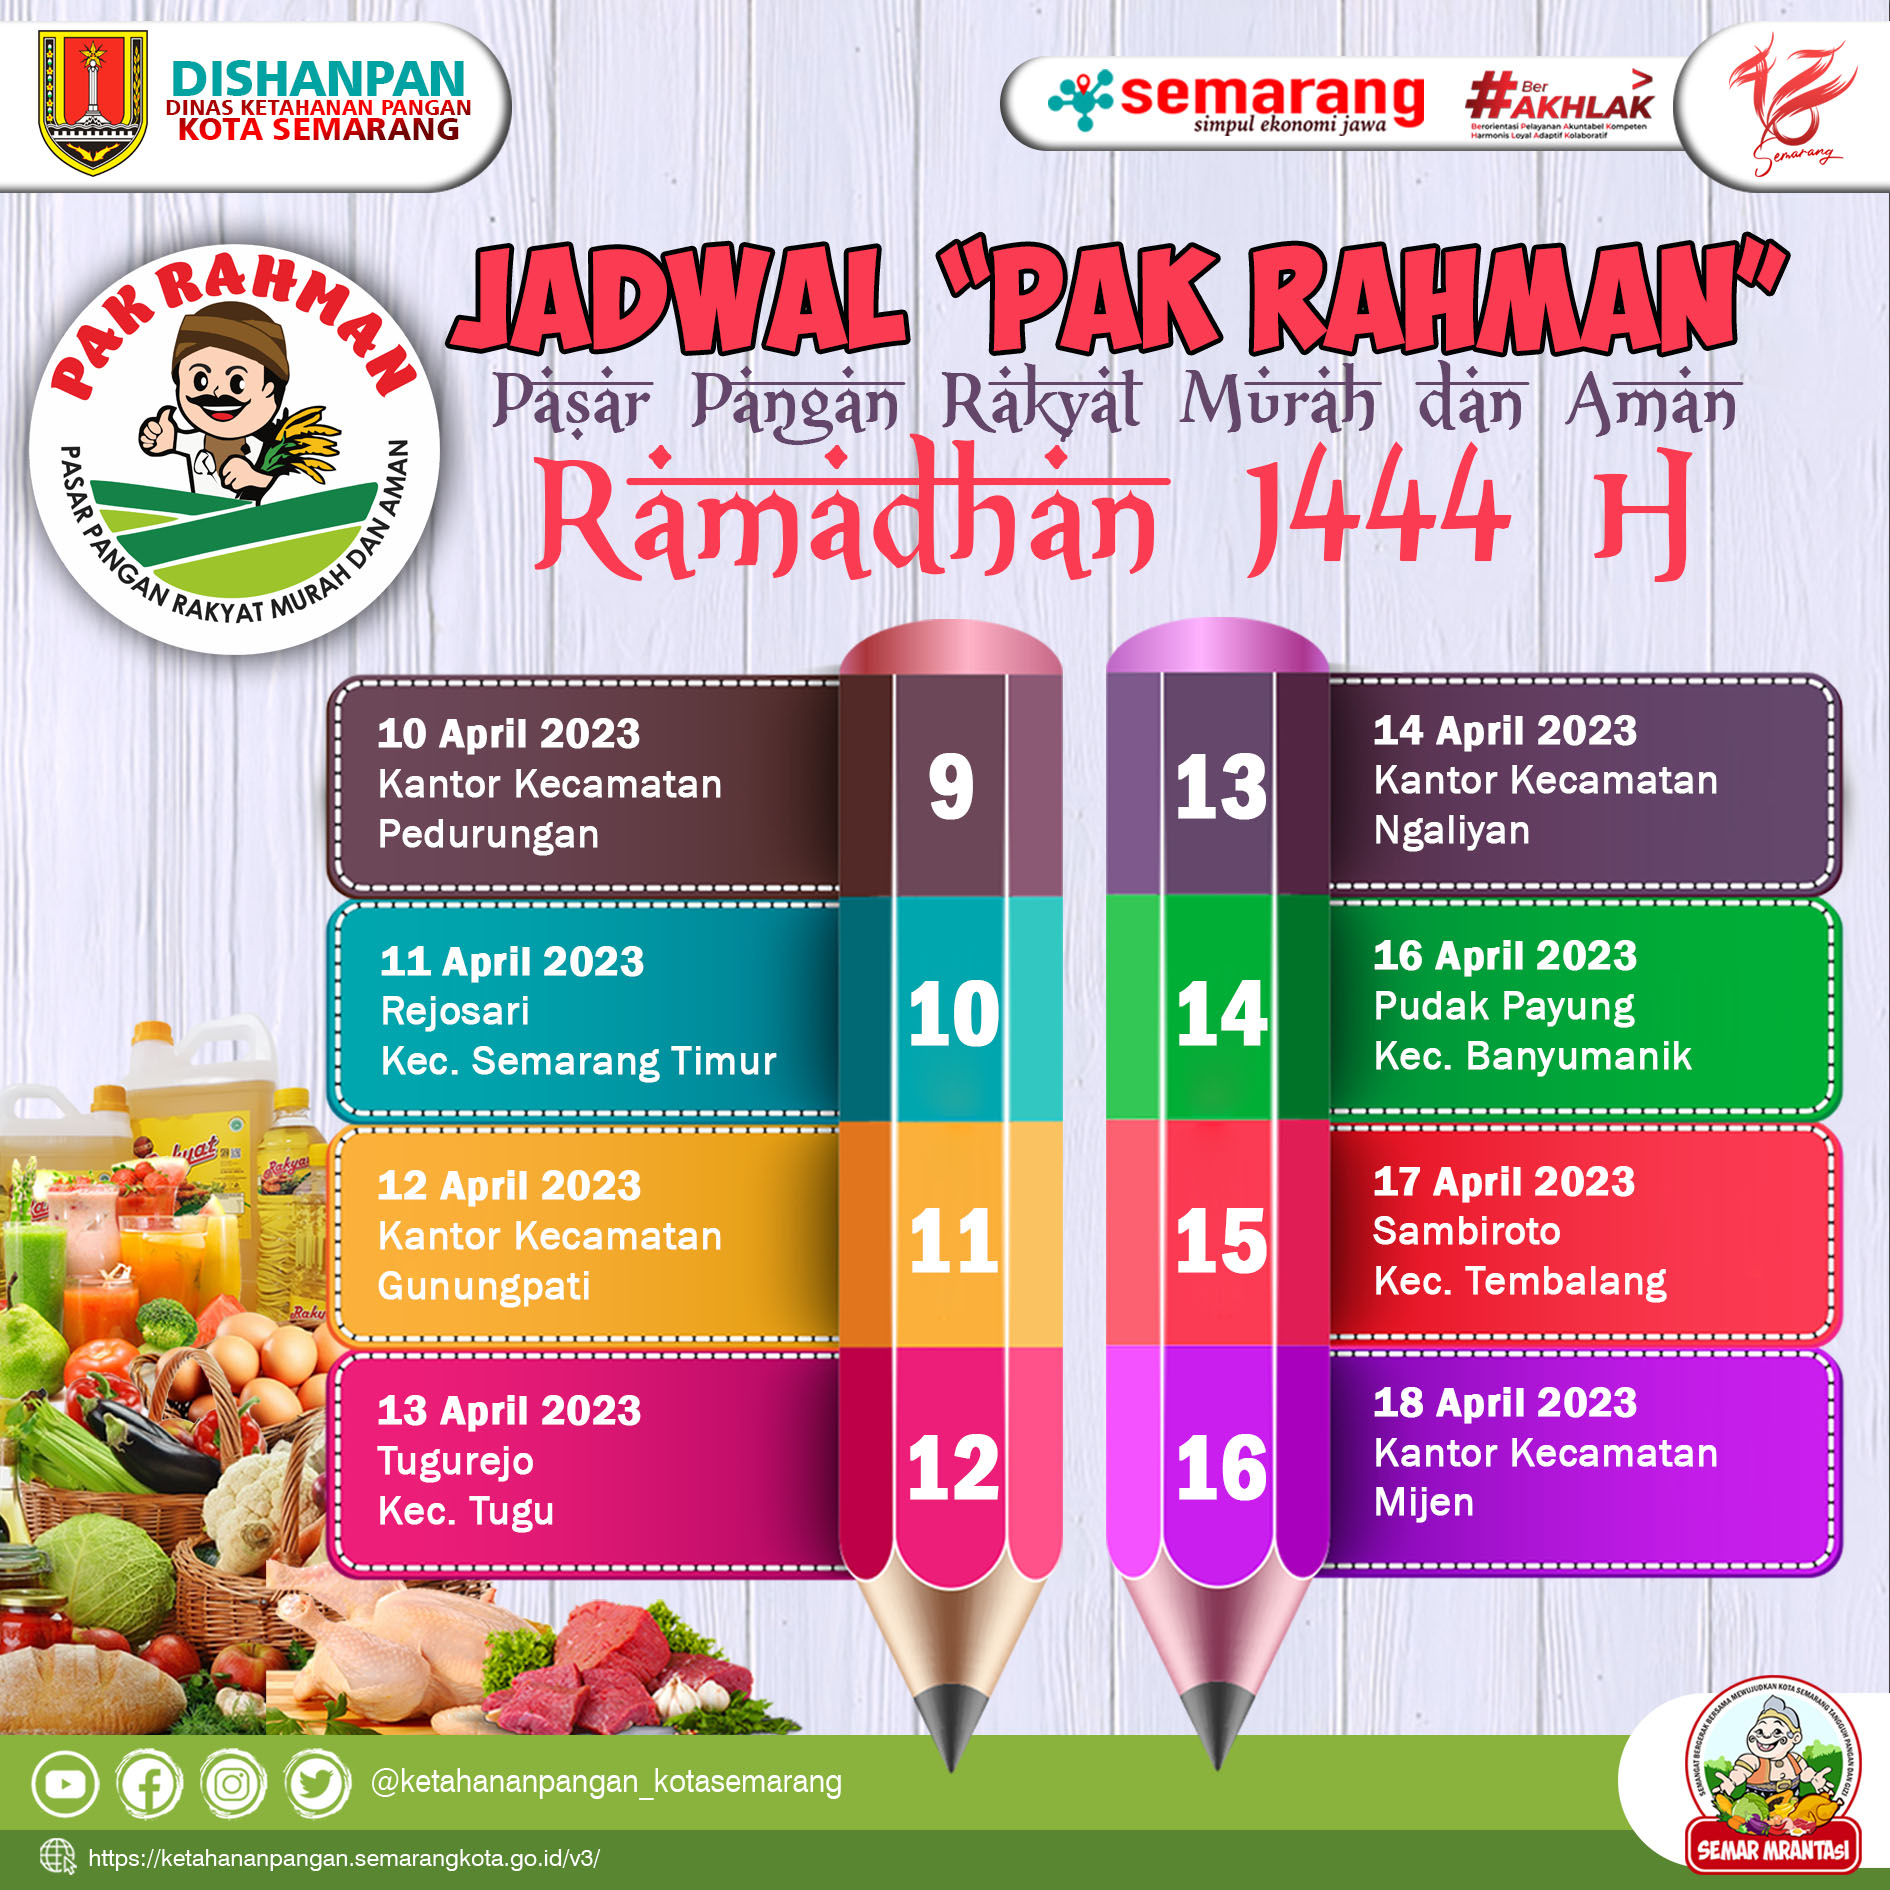 Gambar Jadwal Pasar Pangan Rakyat Murah dan Aman (PAK RAHMAN) Safari Ramadhan 1444H